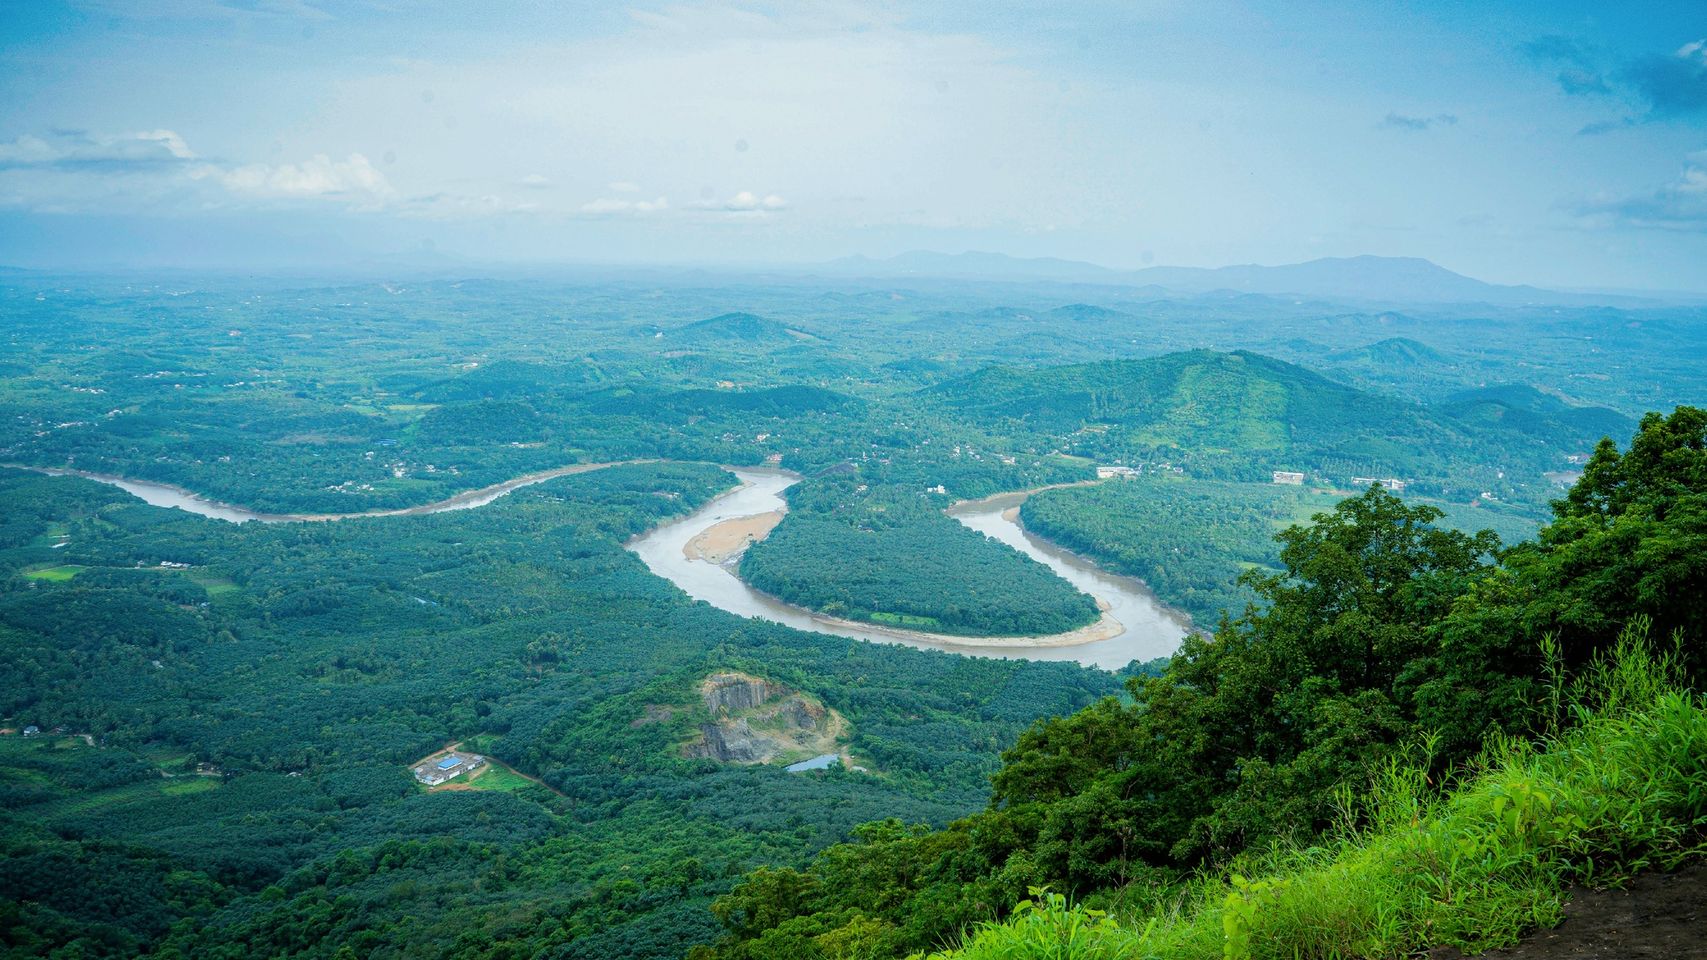 Amazon View Point of India